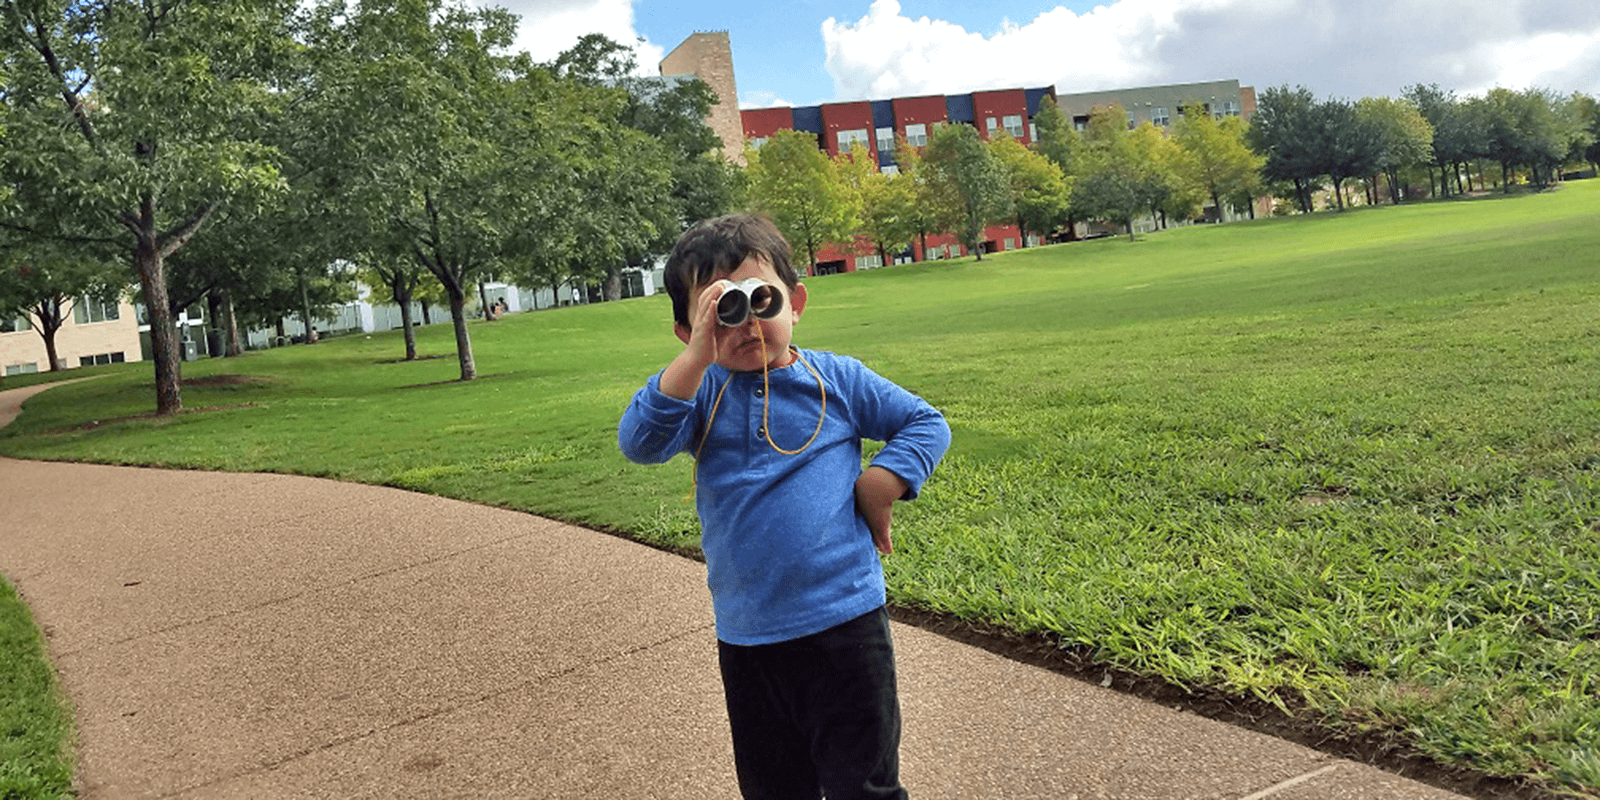 Young boy looking through binoculars at park